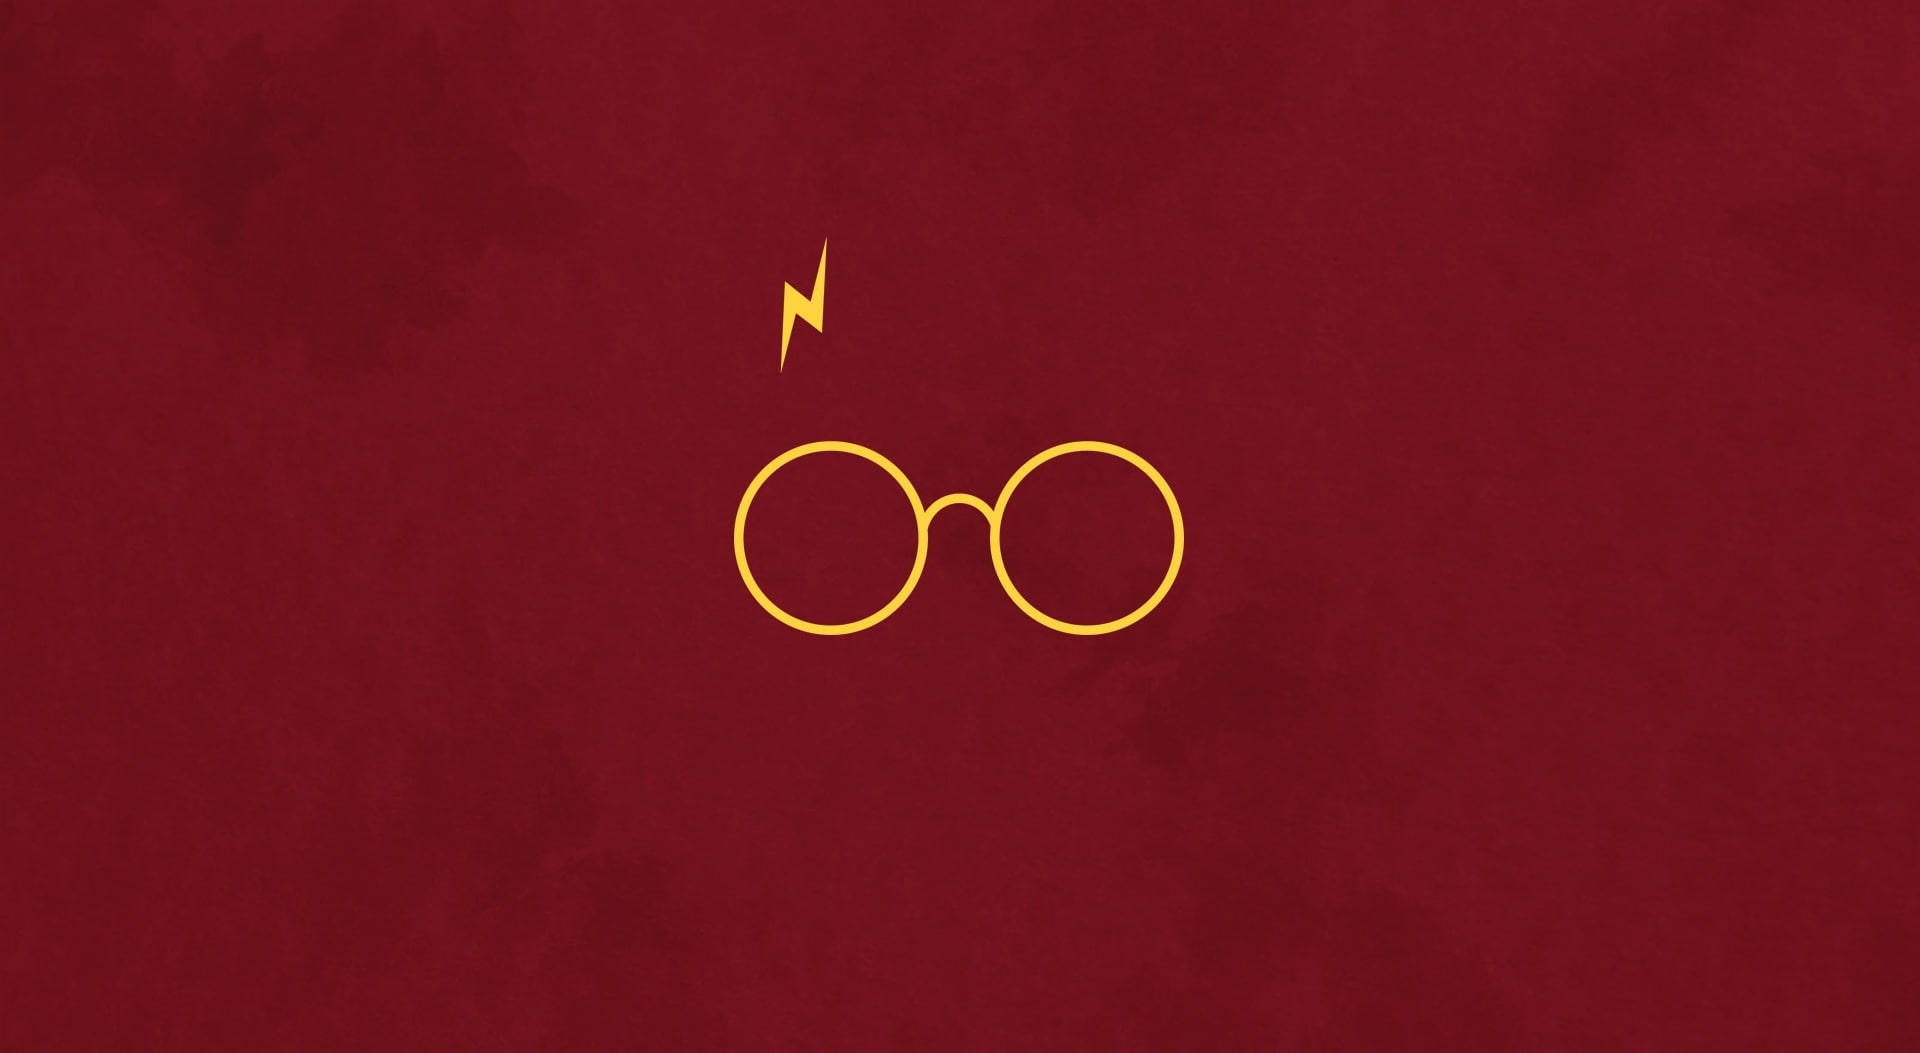 Free Cool Harry Potter Wallpaper Downloads, [100+] Cool Harry Potter  Wallpapers for FREE 